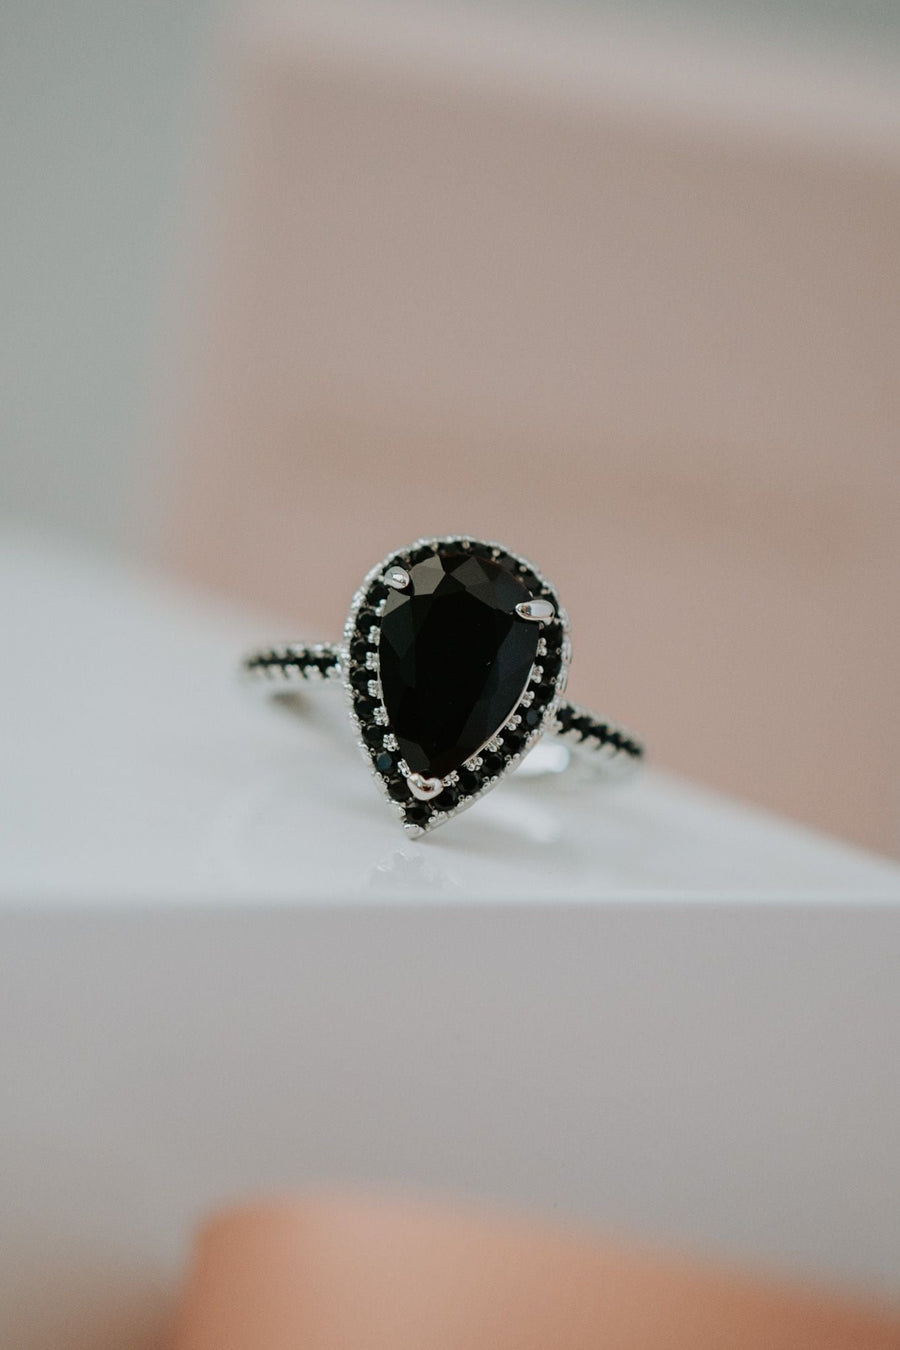 Celestine Black Heart Sterling Silver Ring